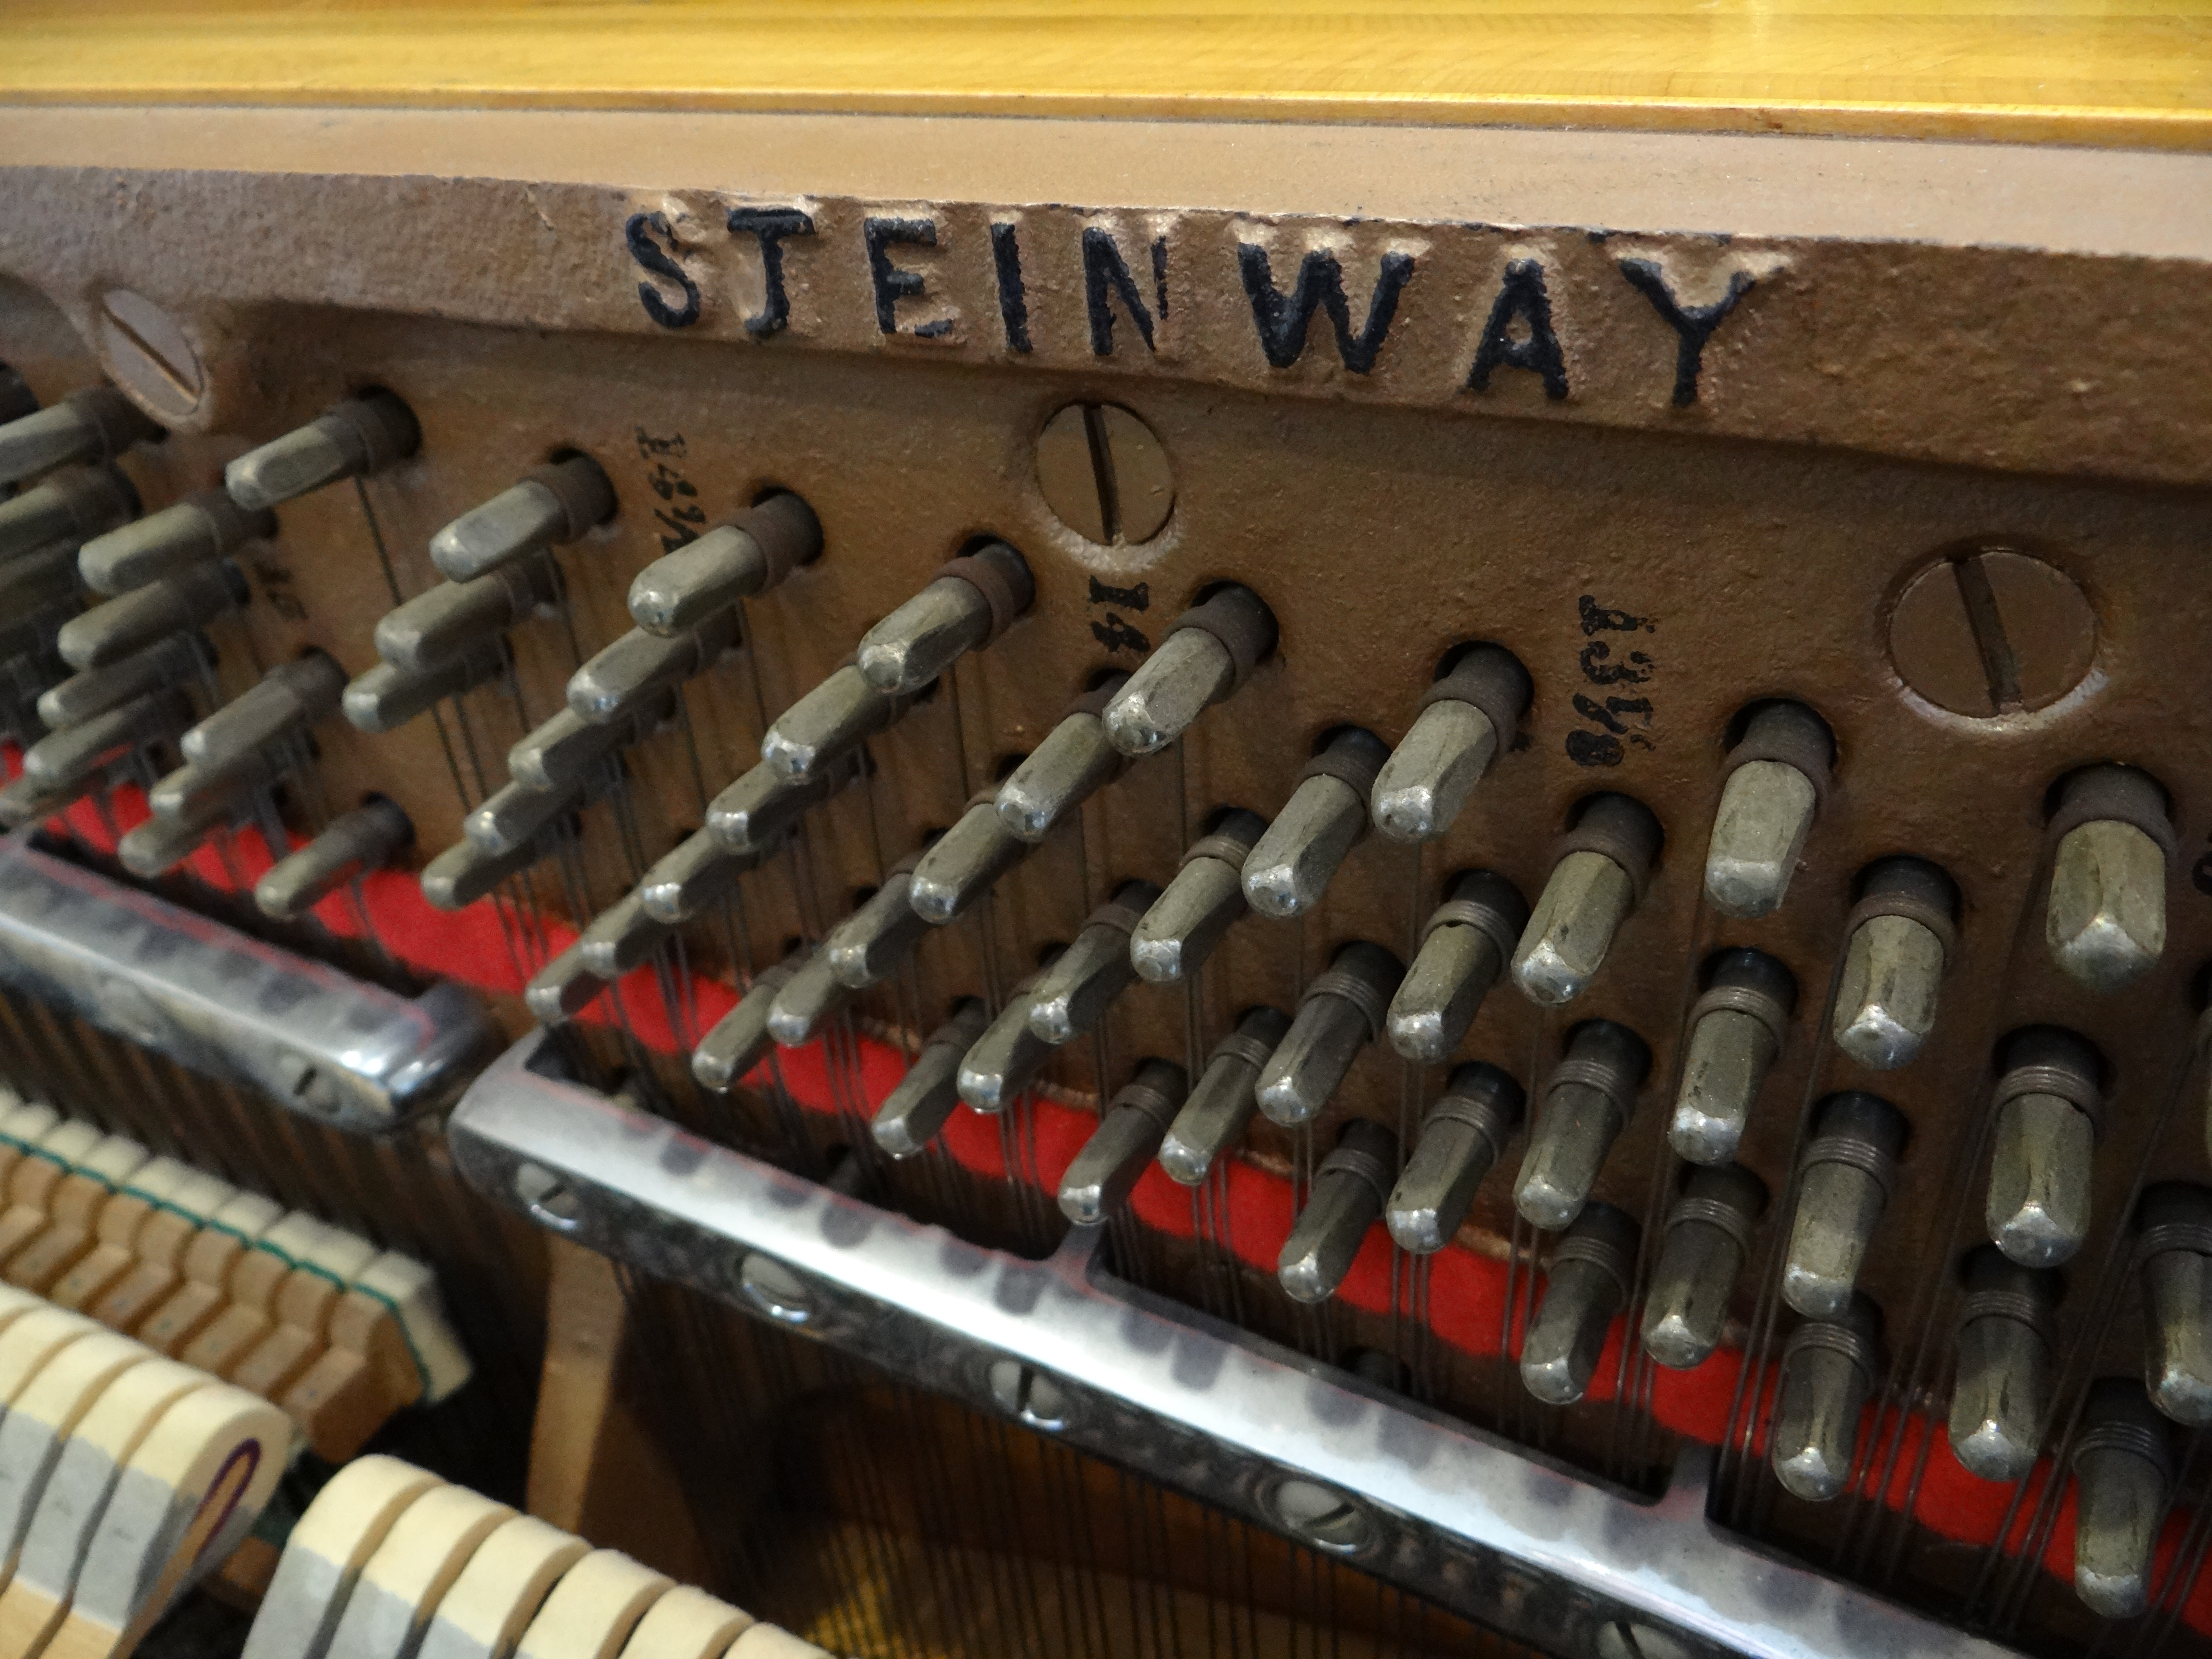 Used Steinway & Sons Piano Upright Piano Studio Piano Black Satin Naples Fort Myers Bonita Springs